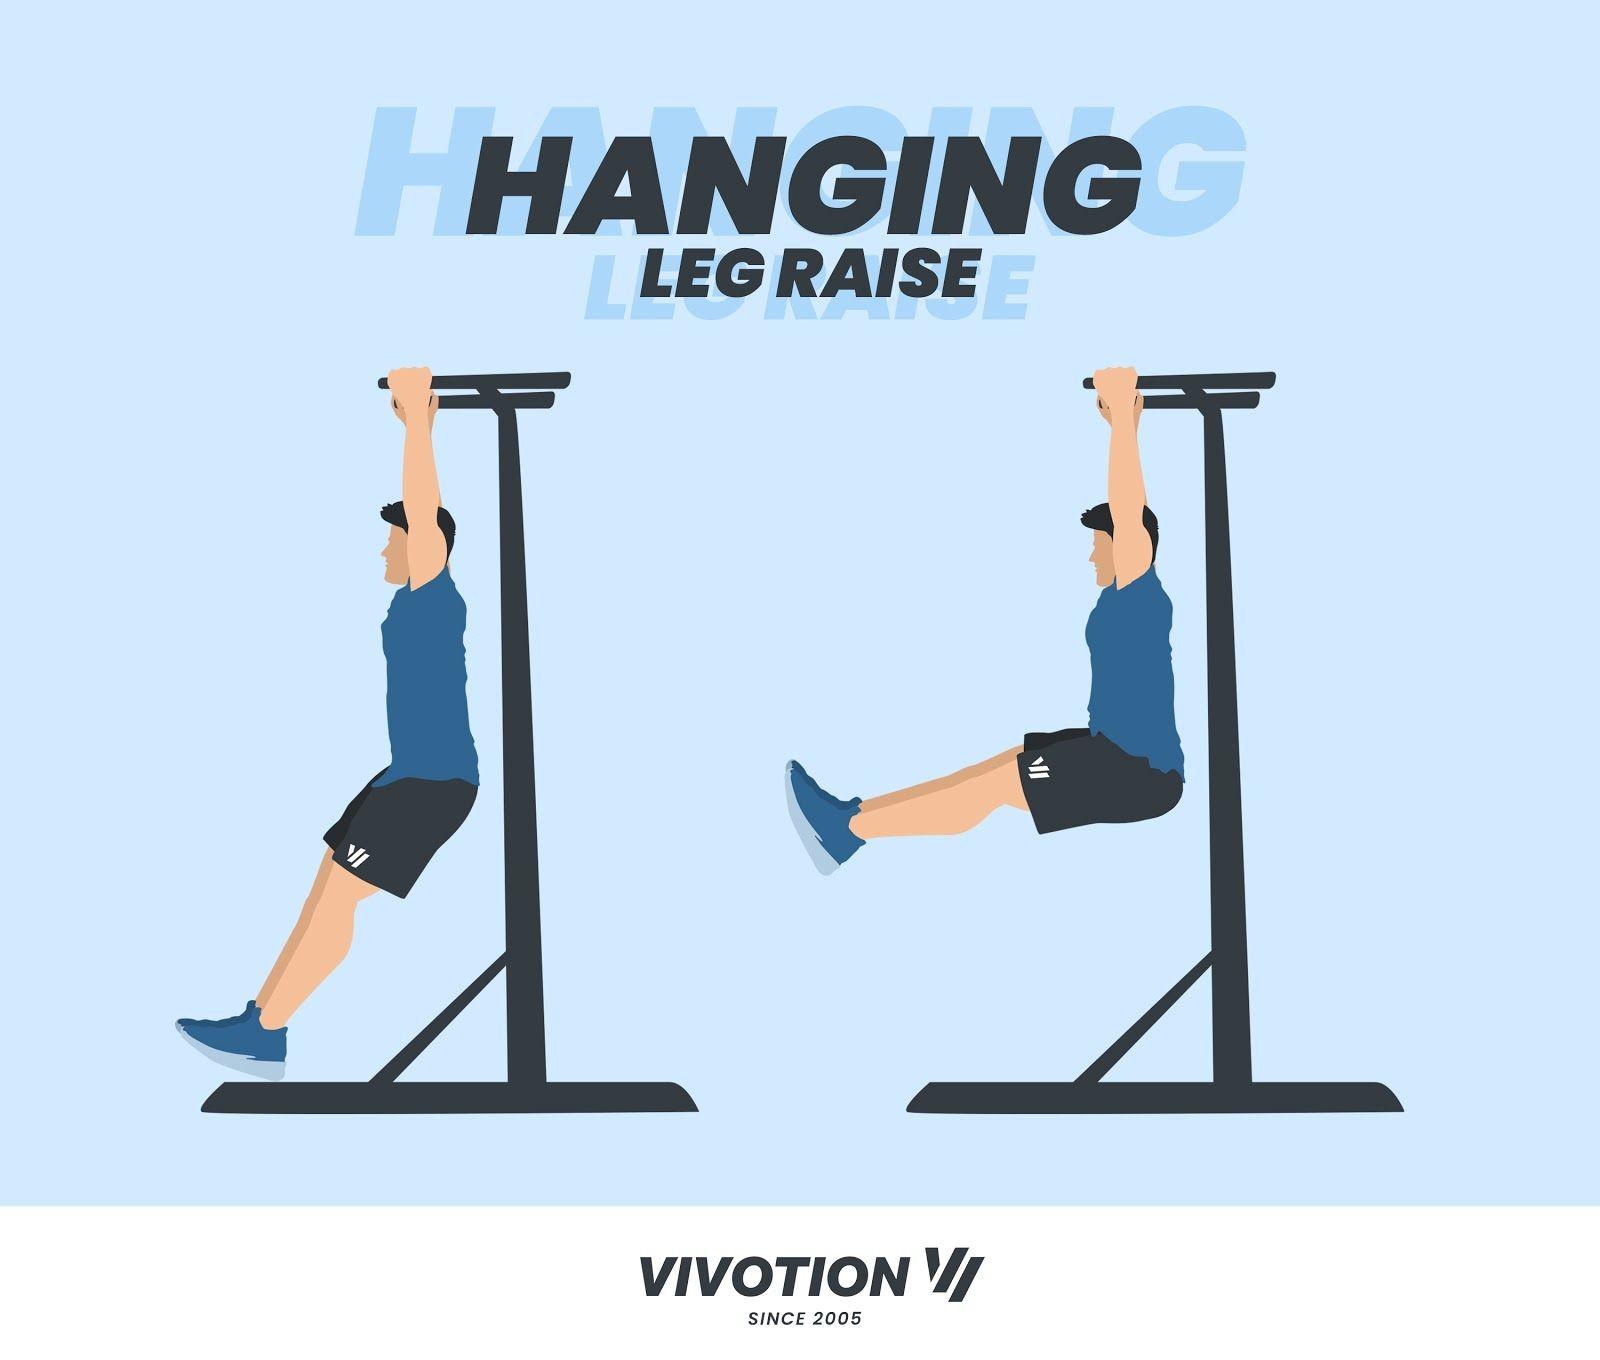 Hanging Leg Raises